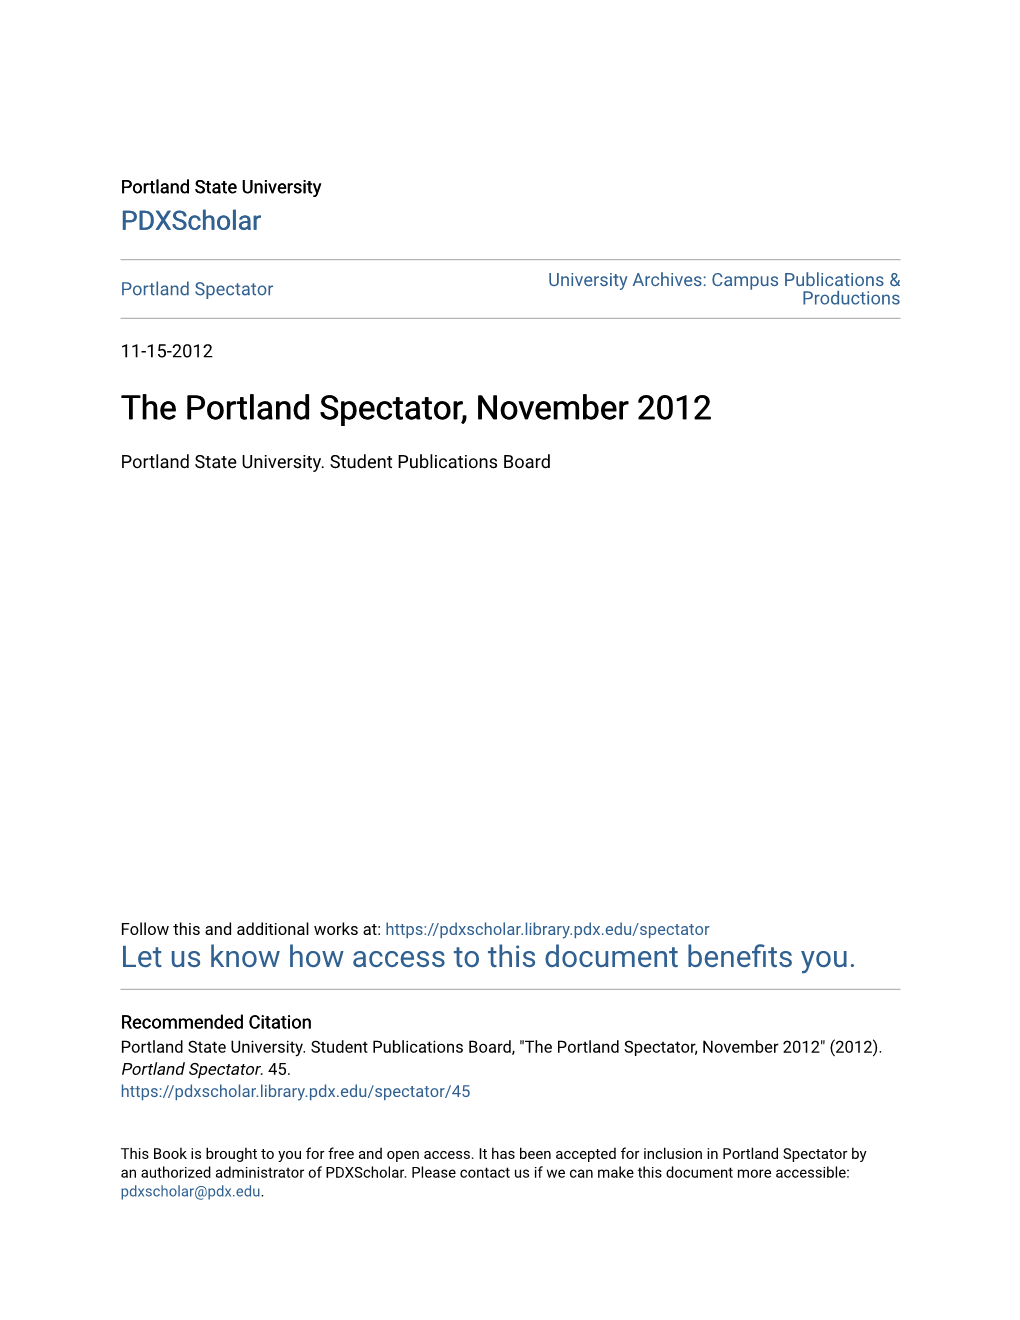 The Portland Spectator, November 2012